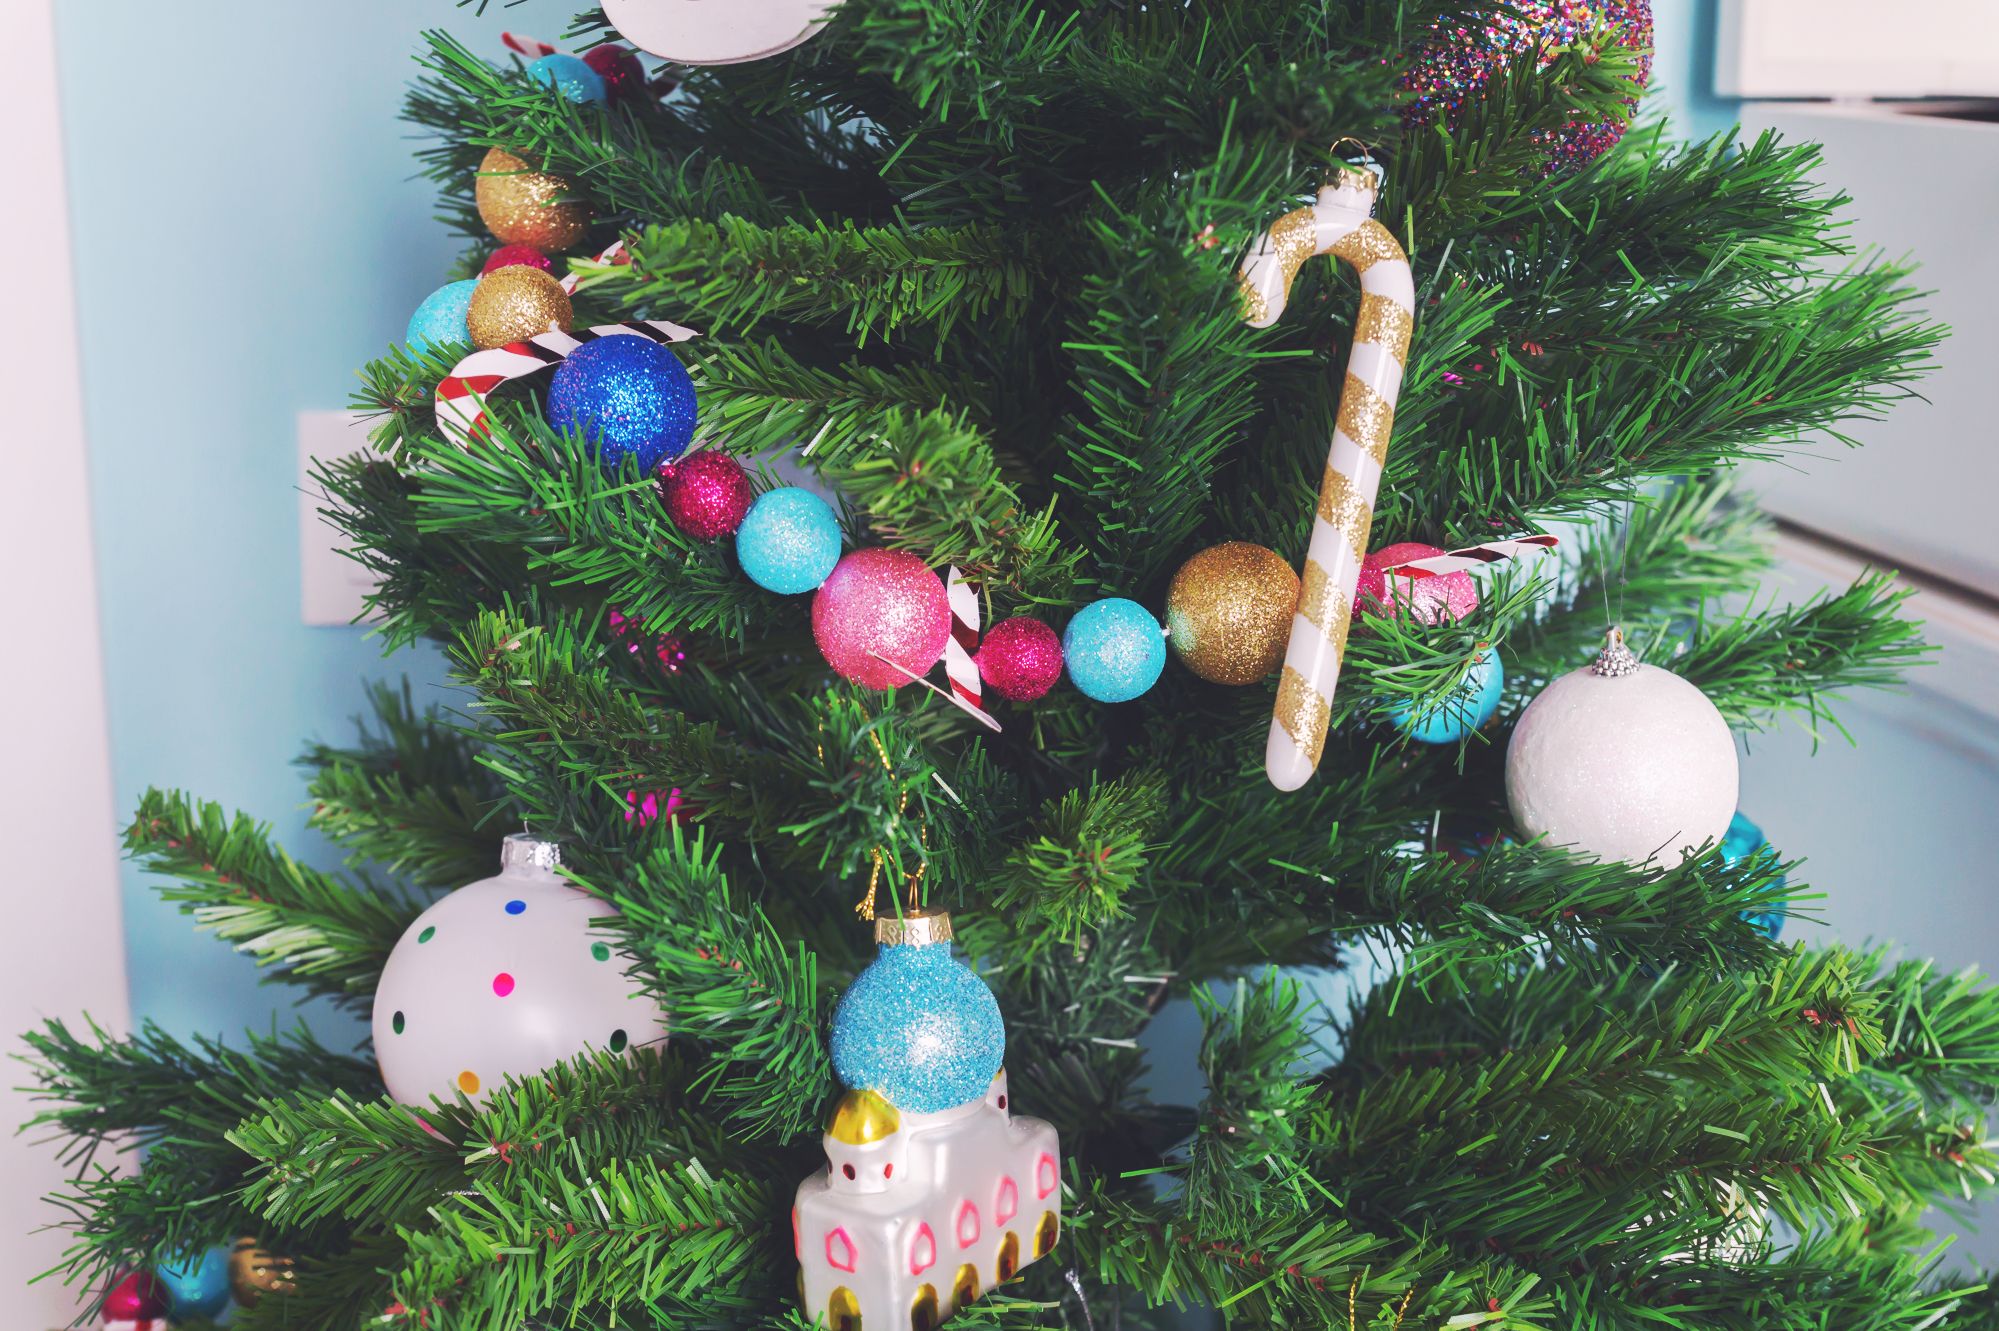 My Christmas tree decorations